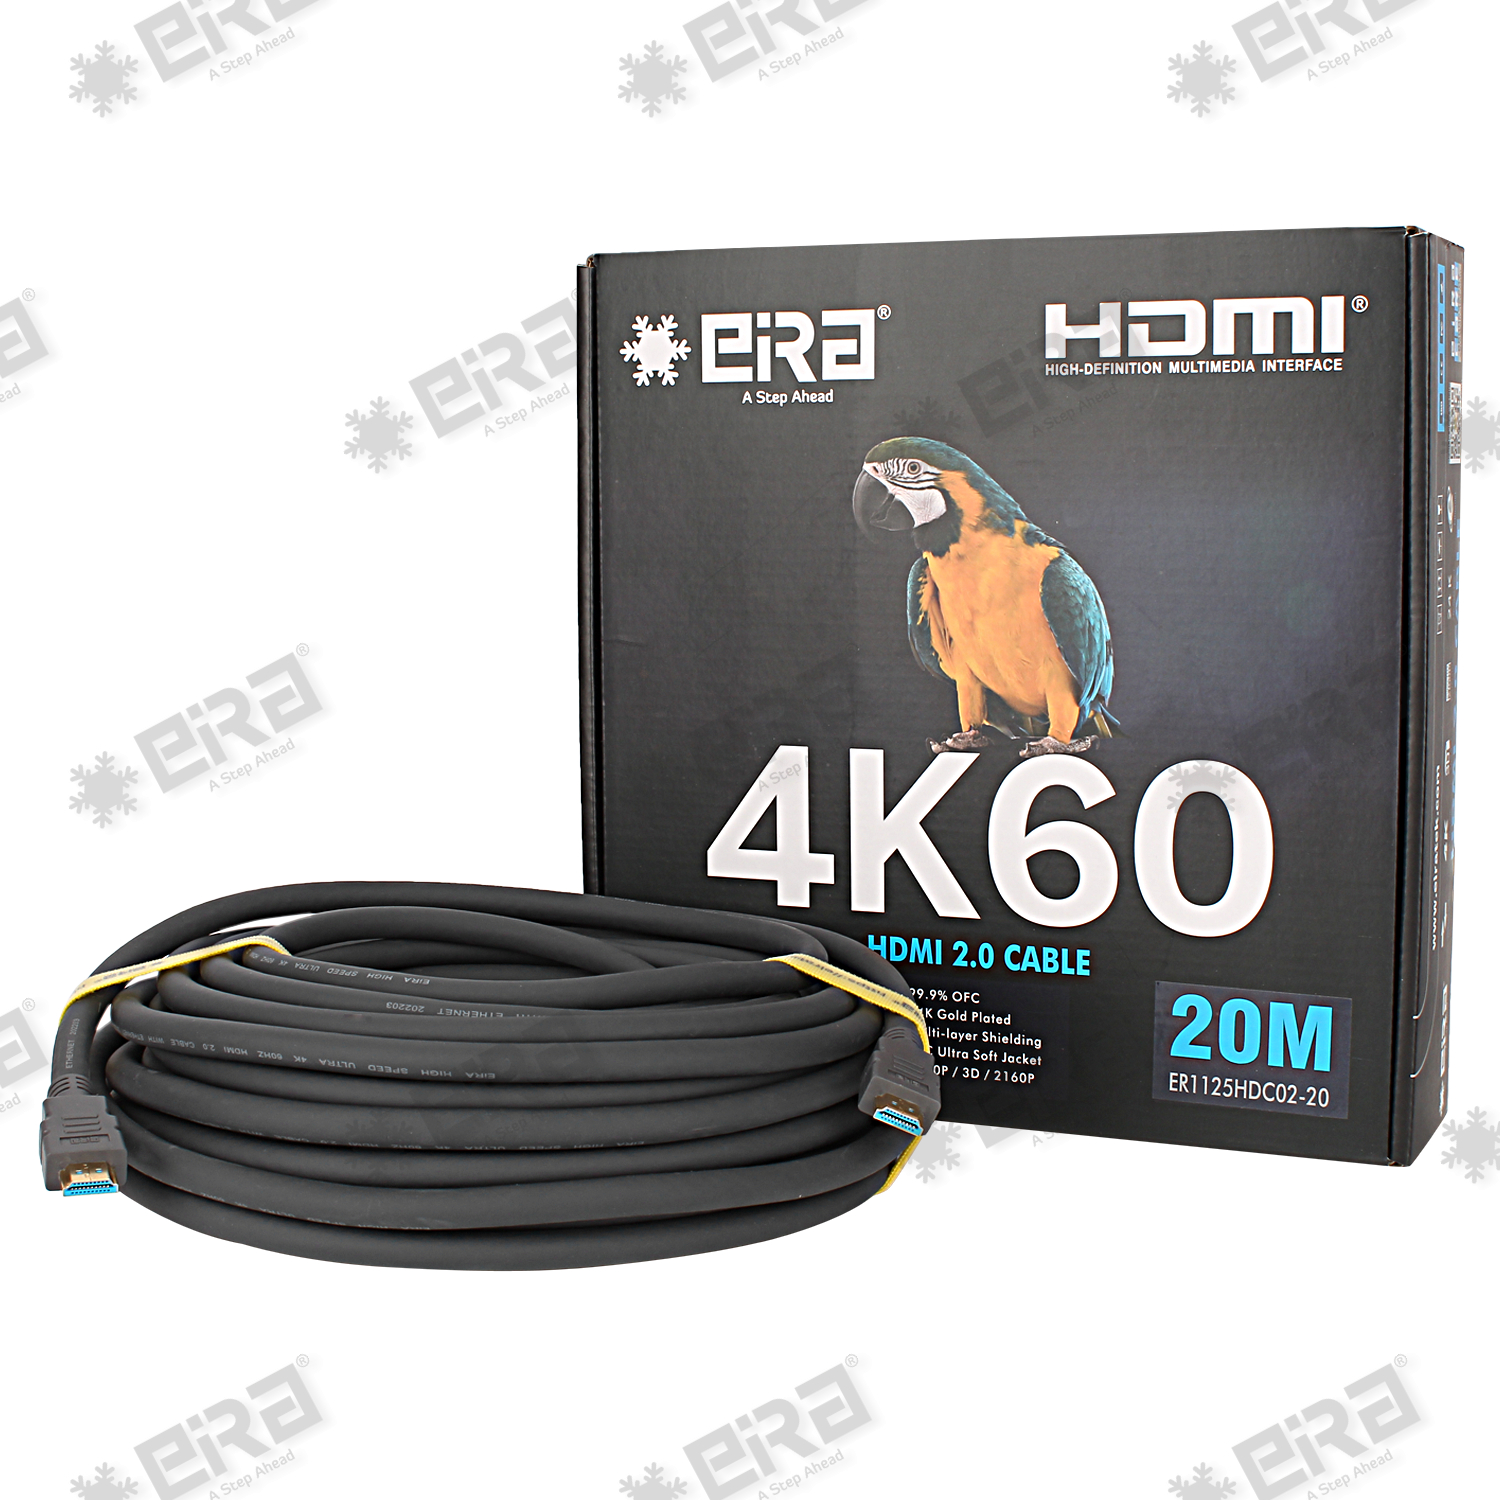 CABLE HDMI 2.0 DE COBRE DE 20 METROS ULTRA HD 4K 60HZ CON FERRITA